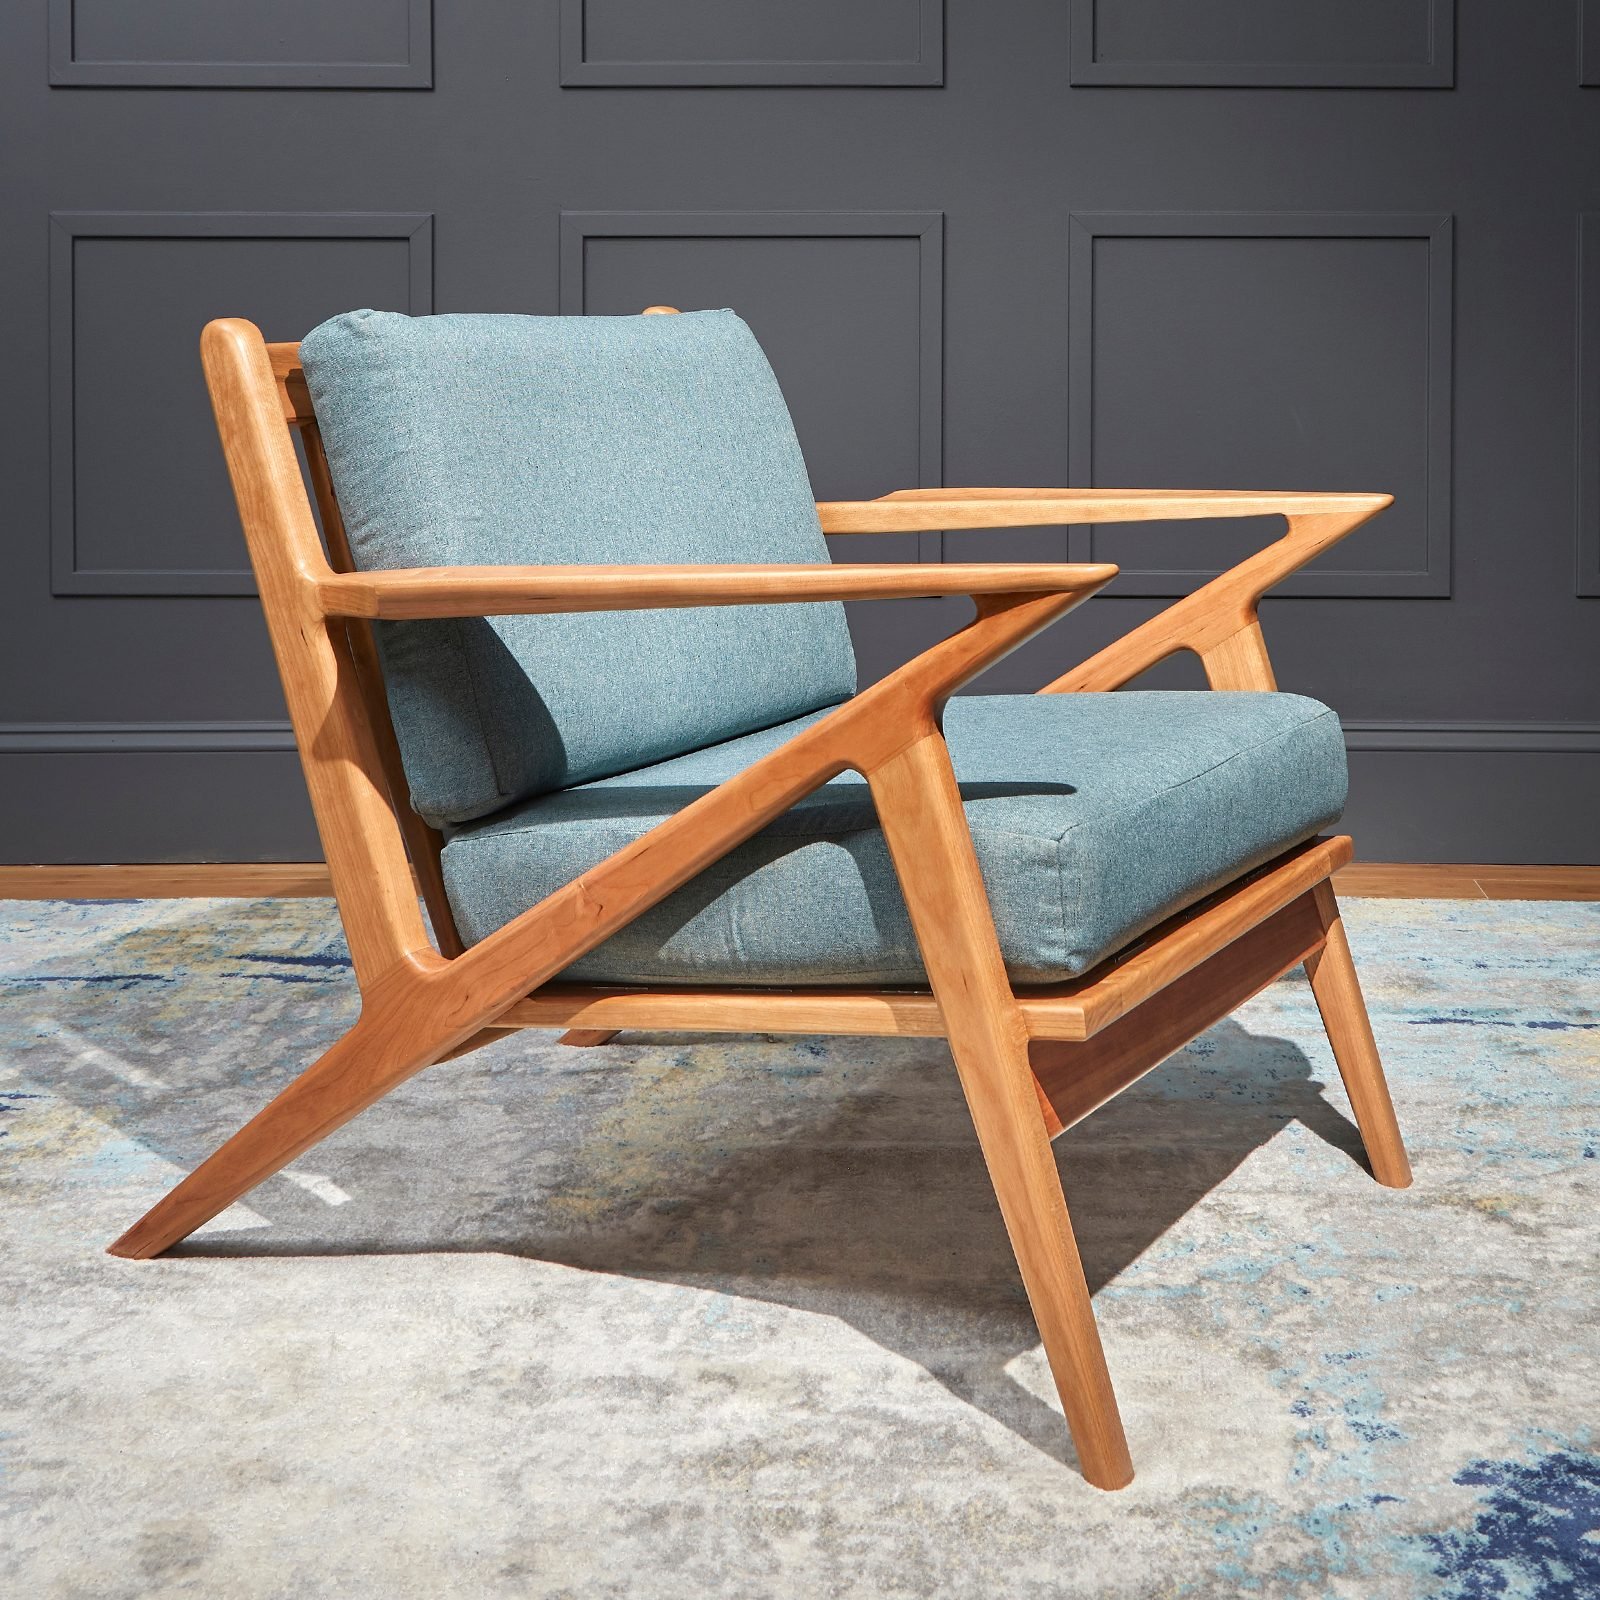 How To Build a DIY Danish Modern Chair